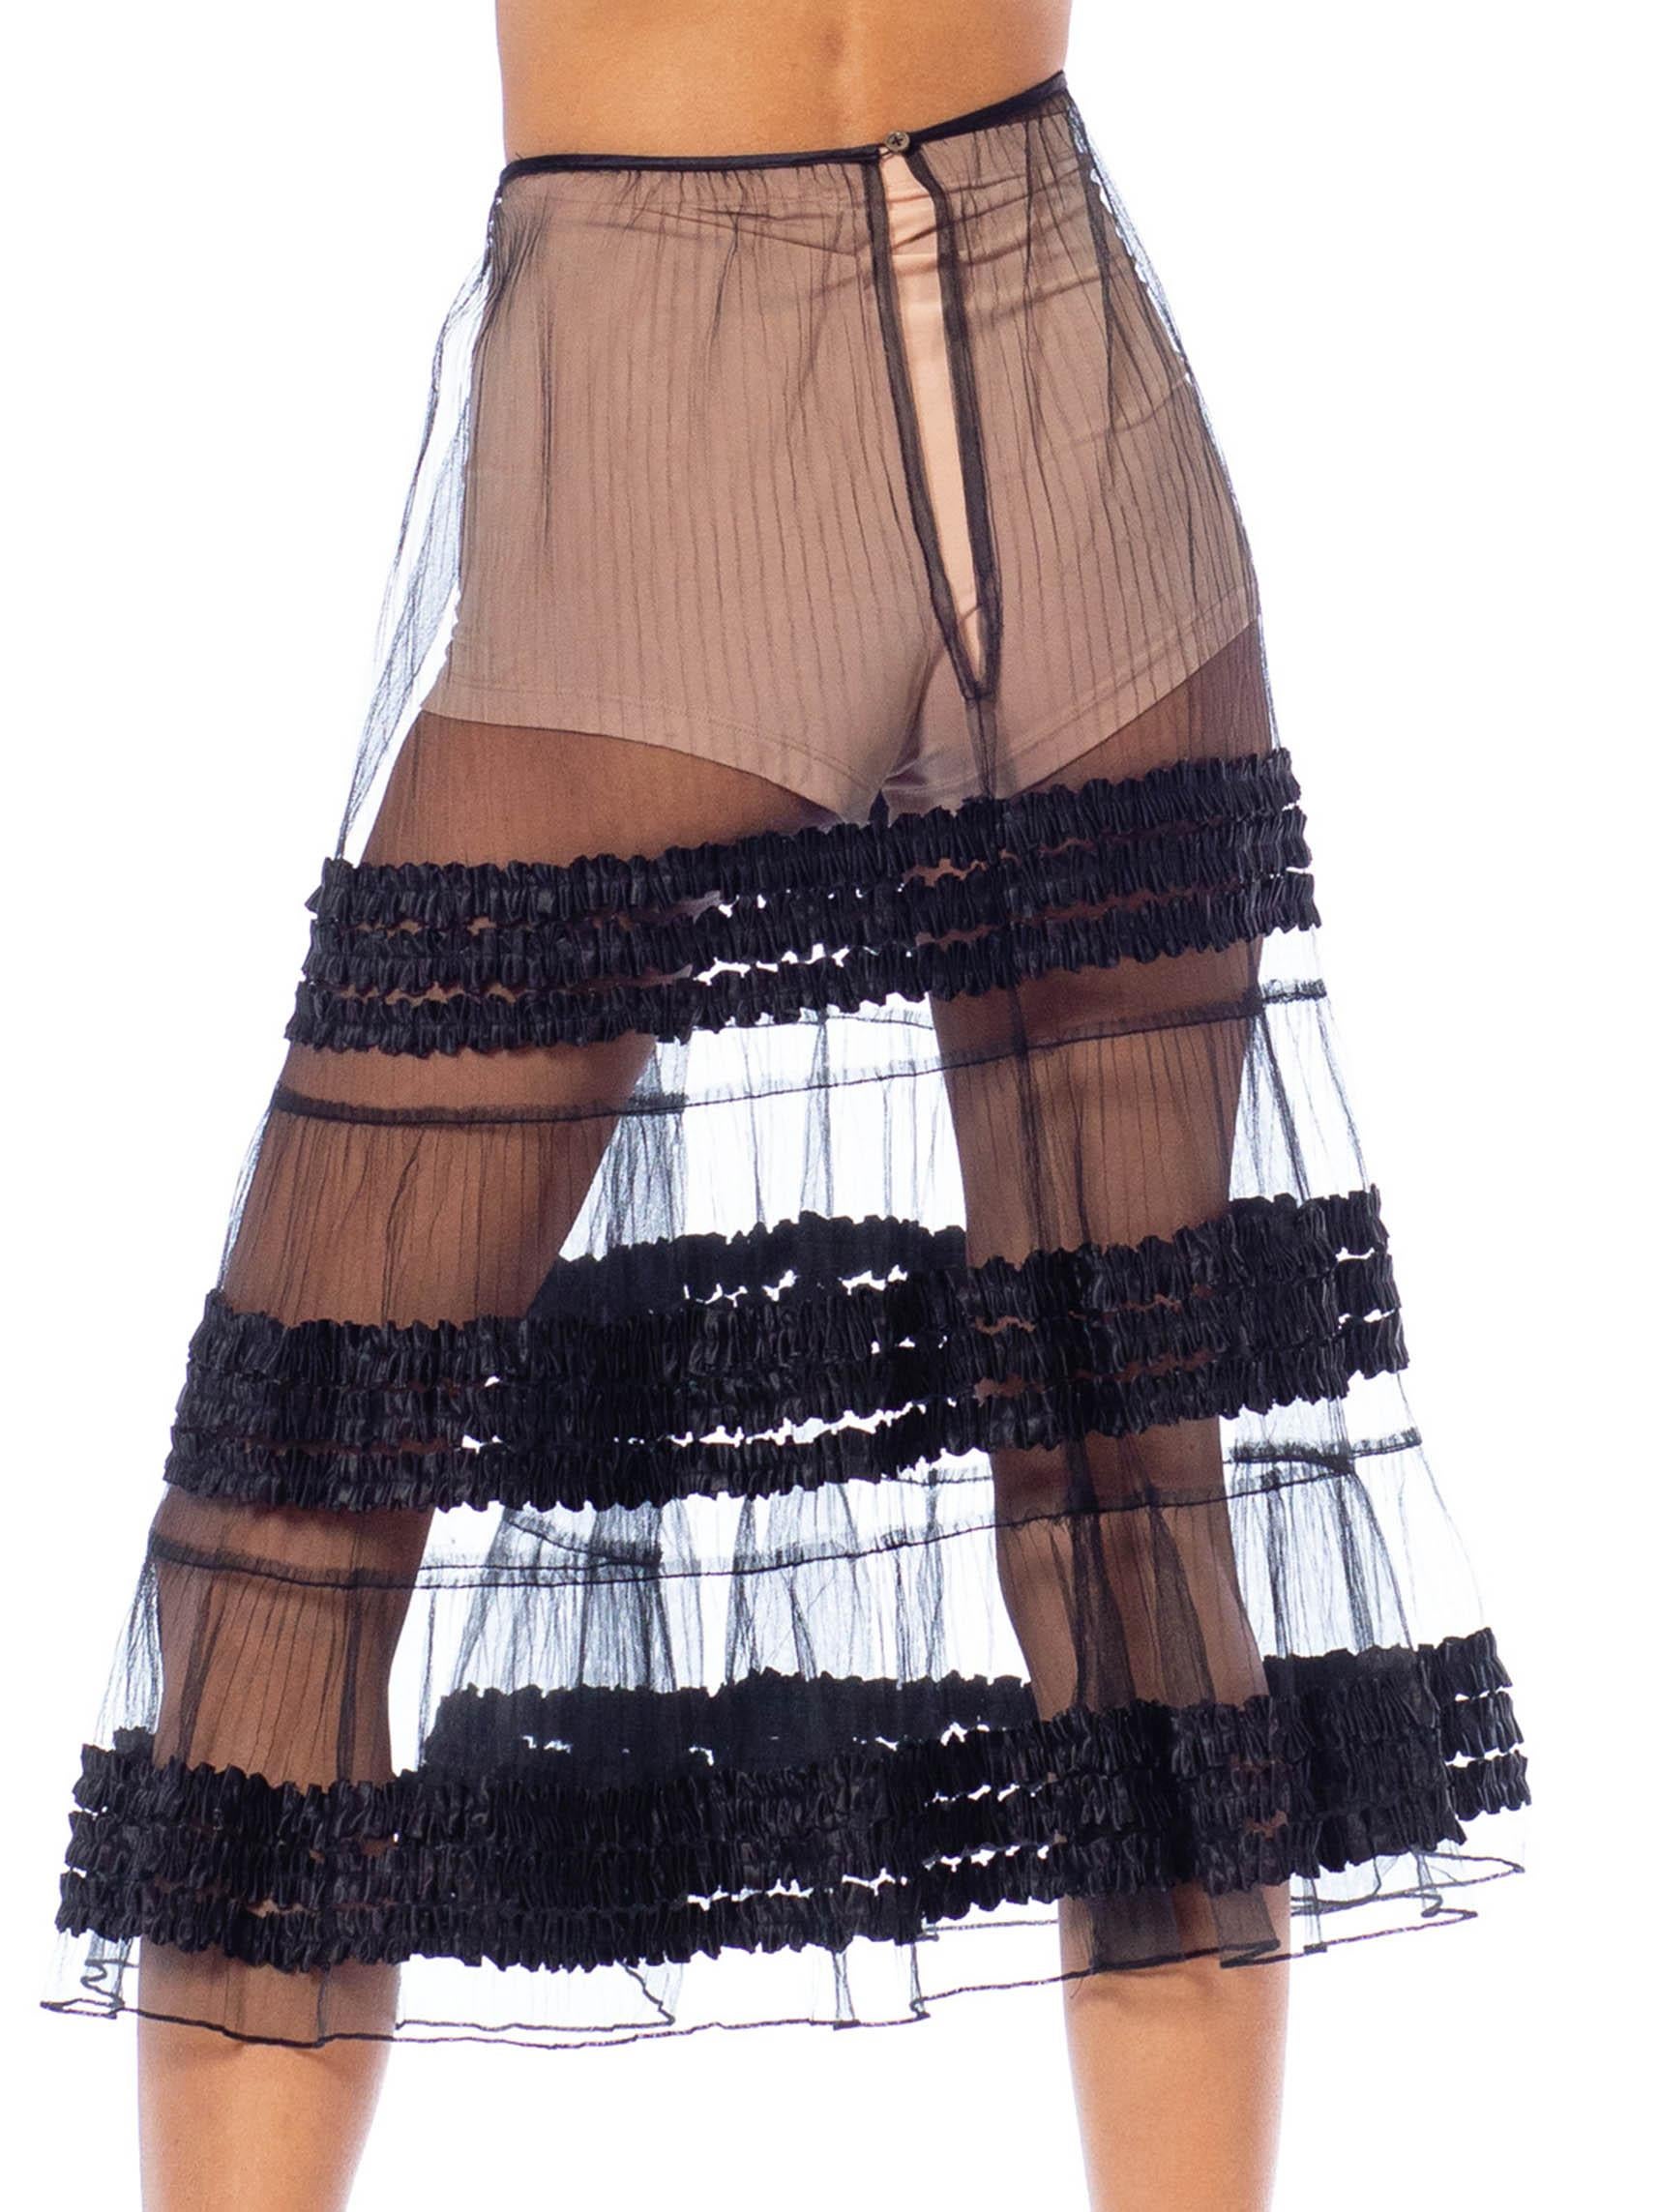 1950S Black Sheer Poly/Nylon Tulle Petticoat Skirt With Satin Ribbon Ruffles 2